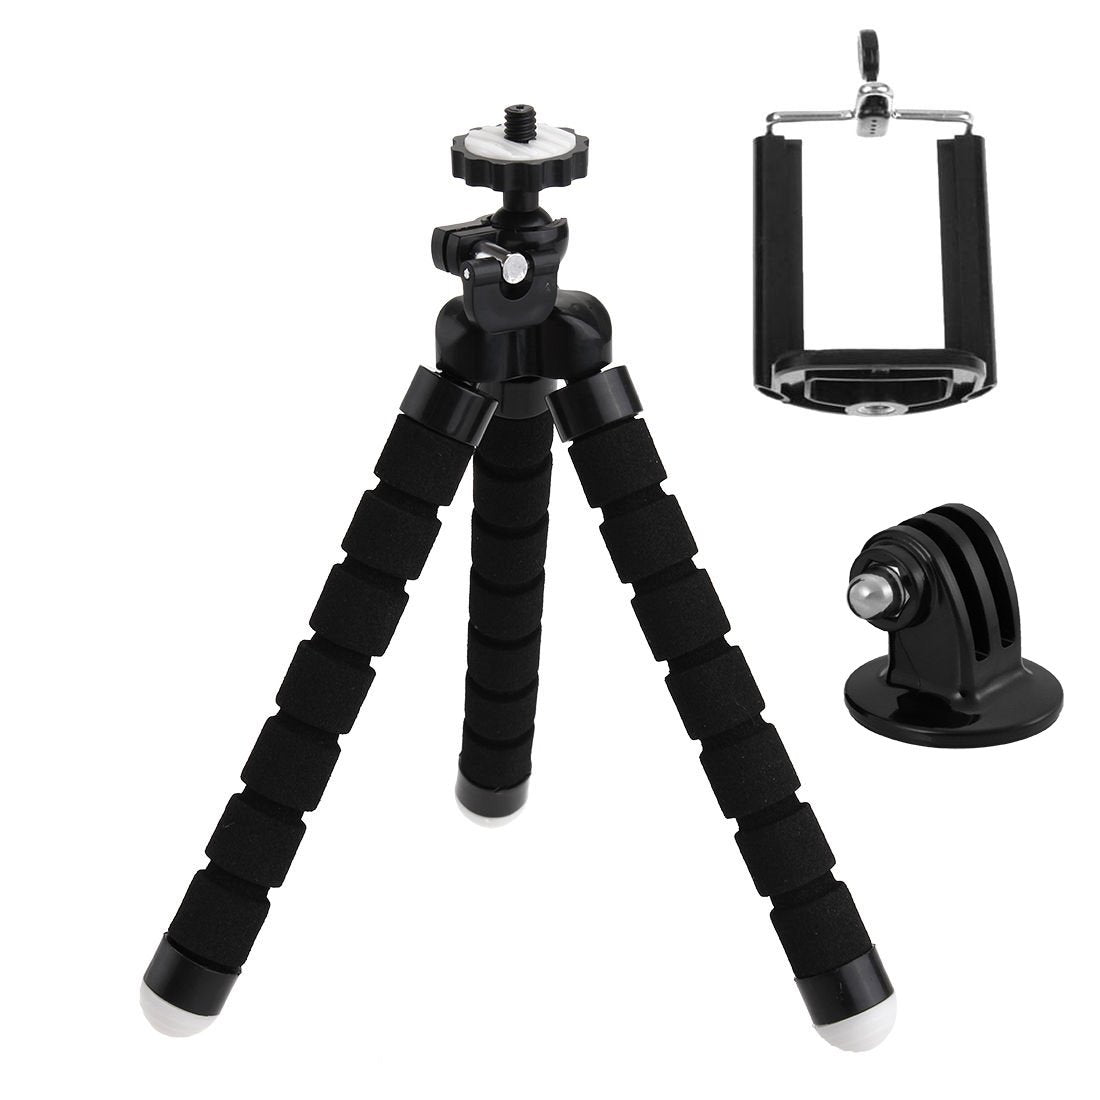 Tripod Mini Octopus Design Handheld Stand Grip Holder Mount - for Universal Cameras &amp; Mobile Phone &amp; Go Pro Attachment - Black